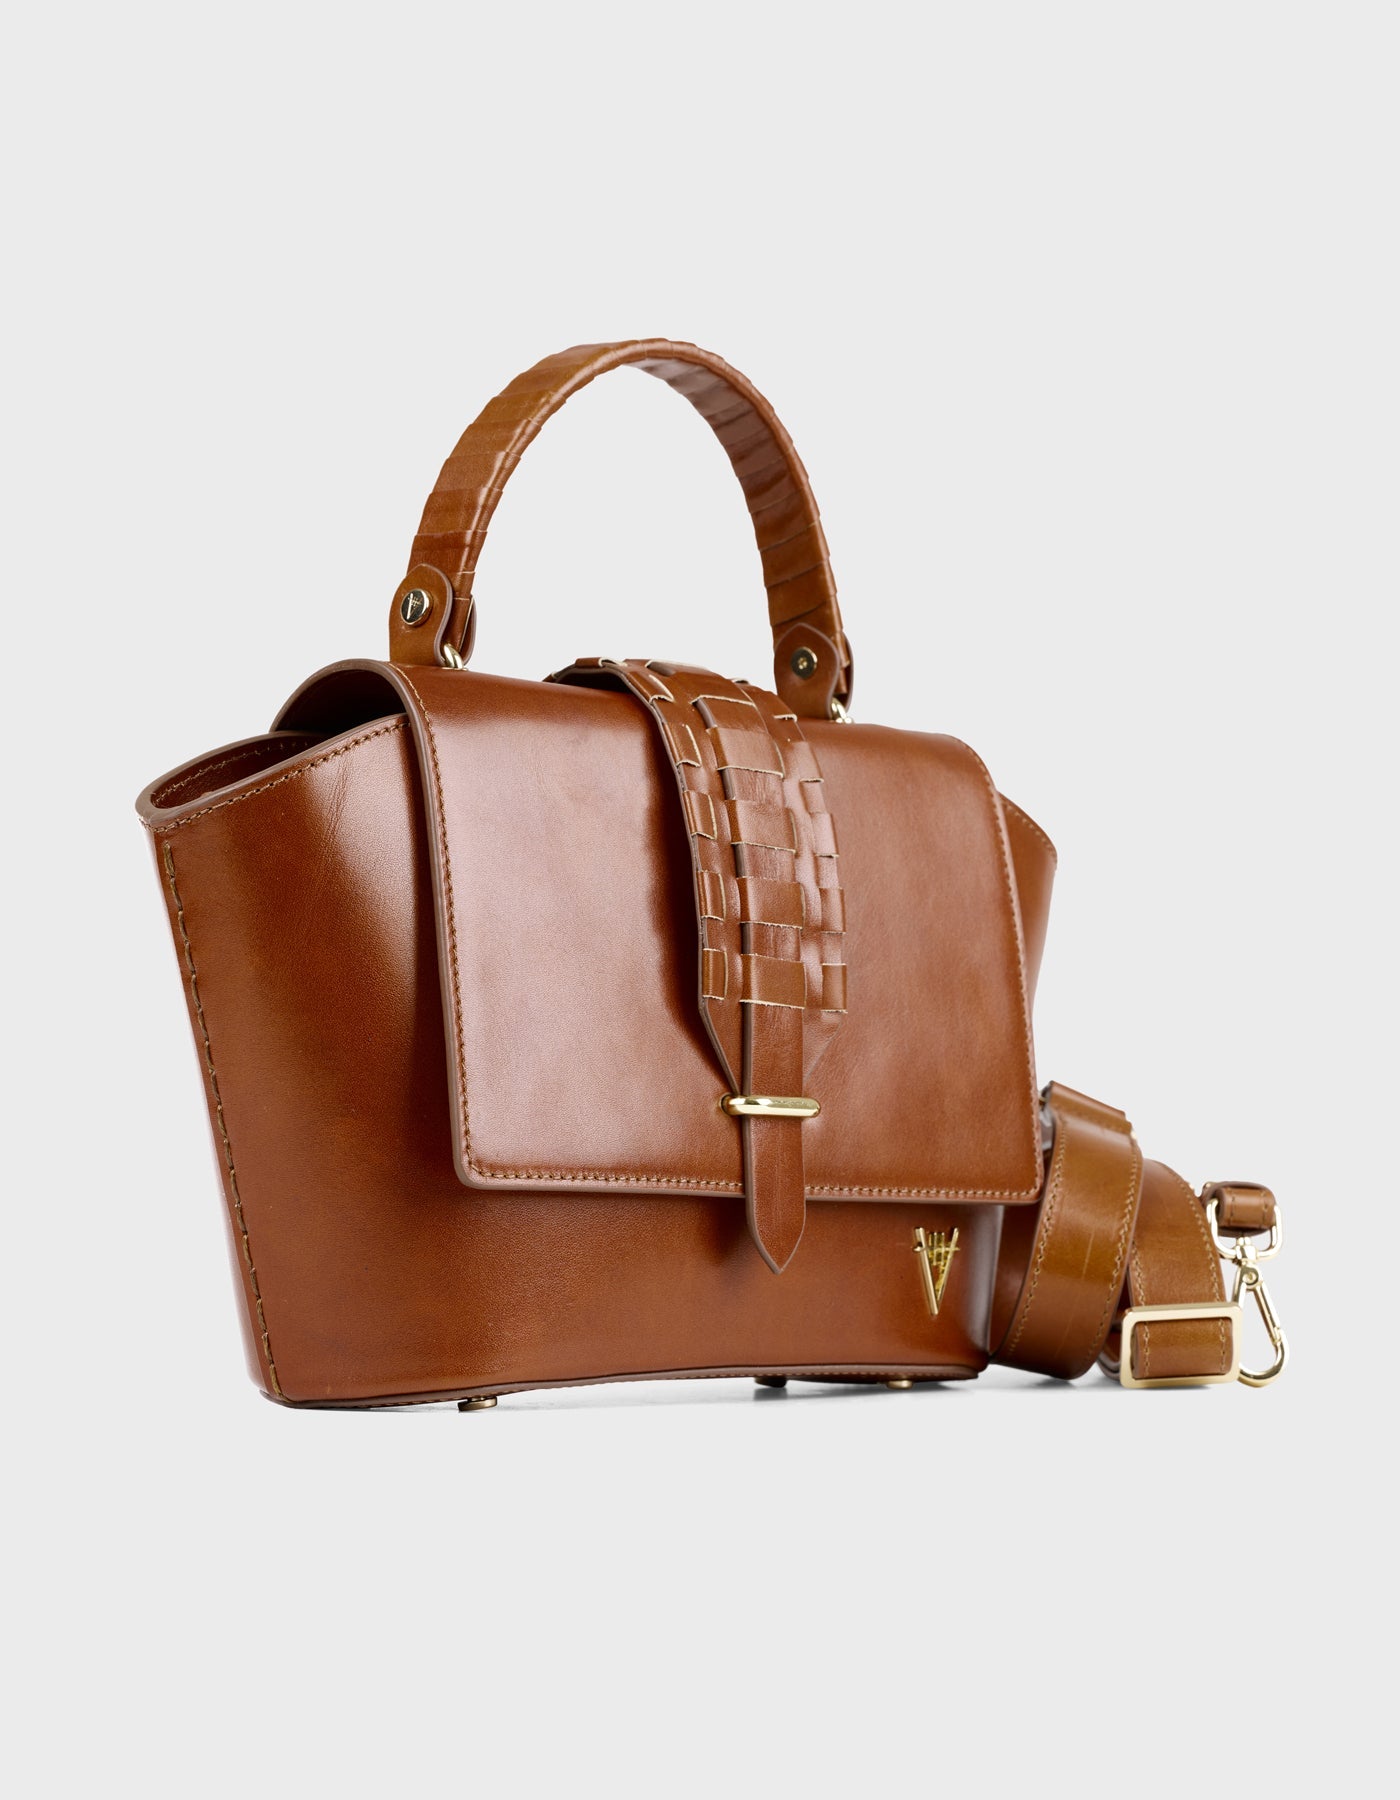 HiVa Atelier | Ventus Shoulder Bag Chocolate | Beautiful and Versatile